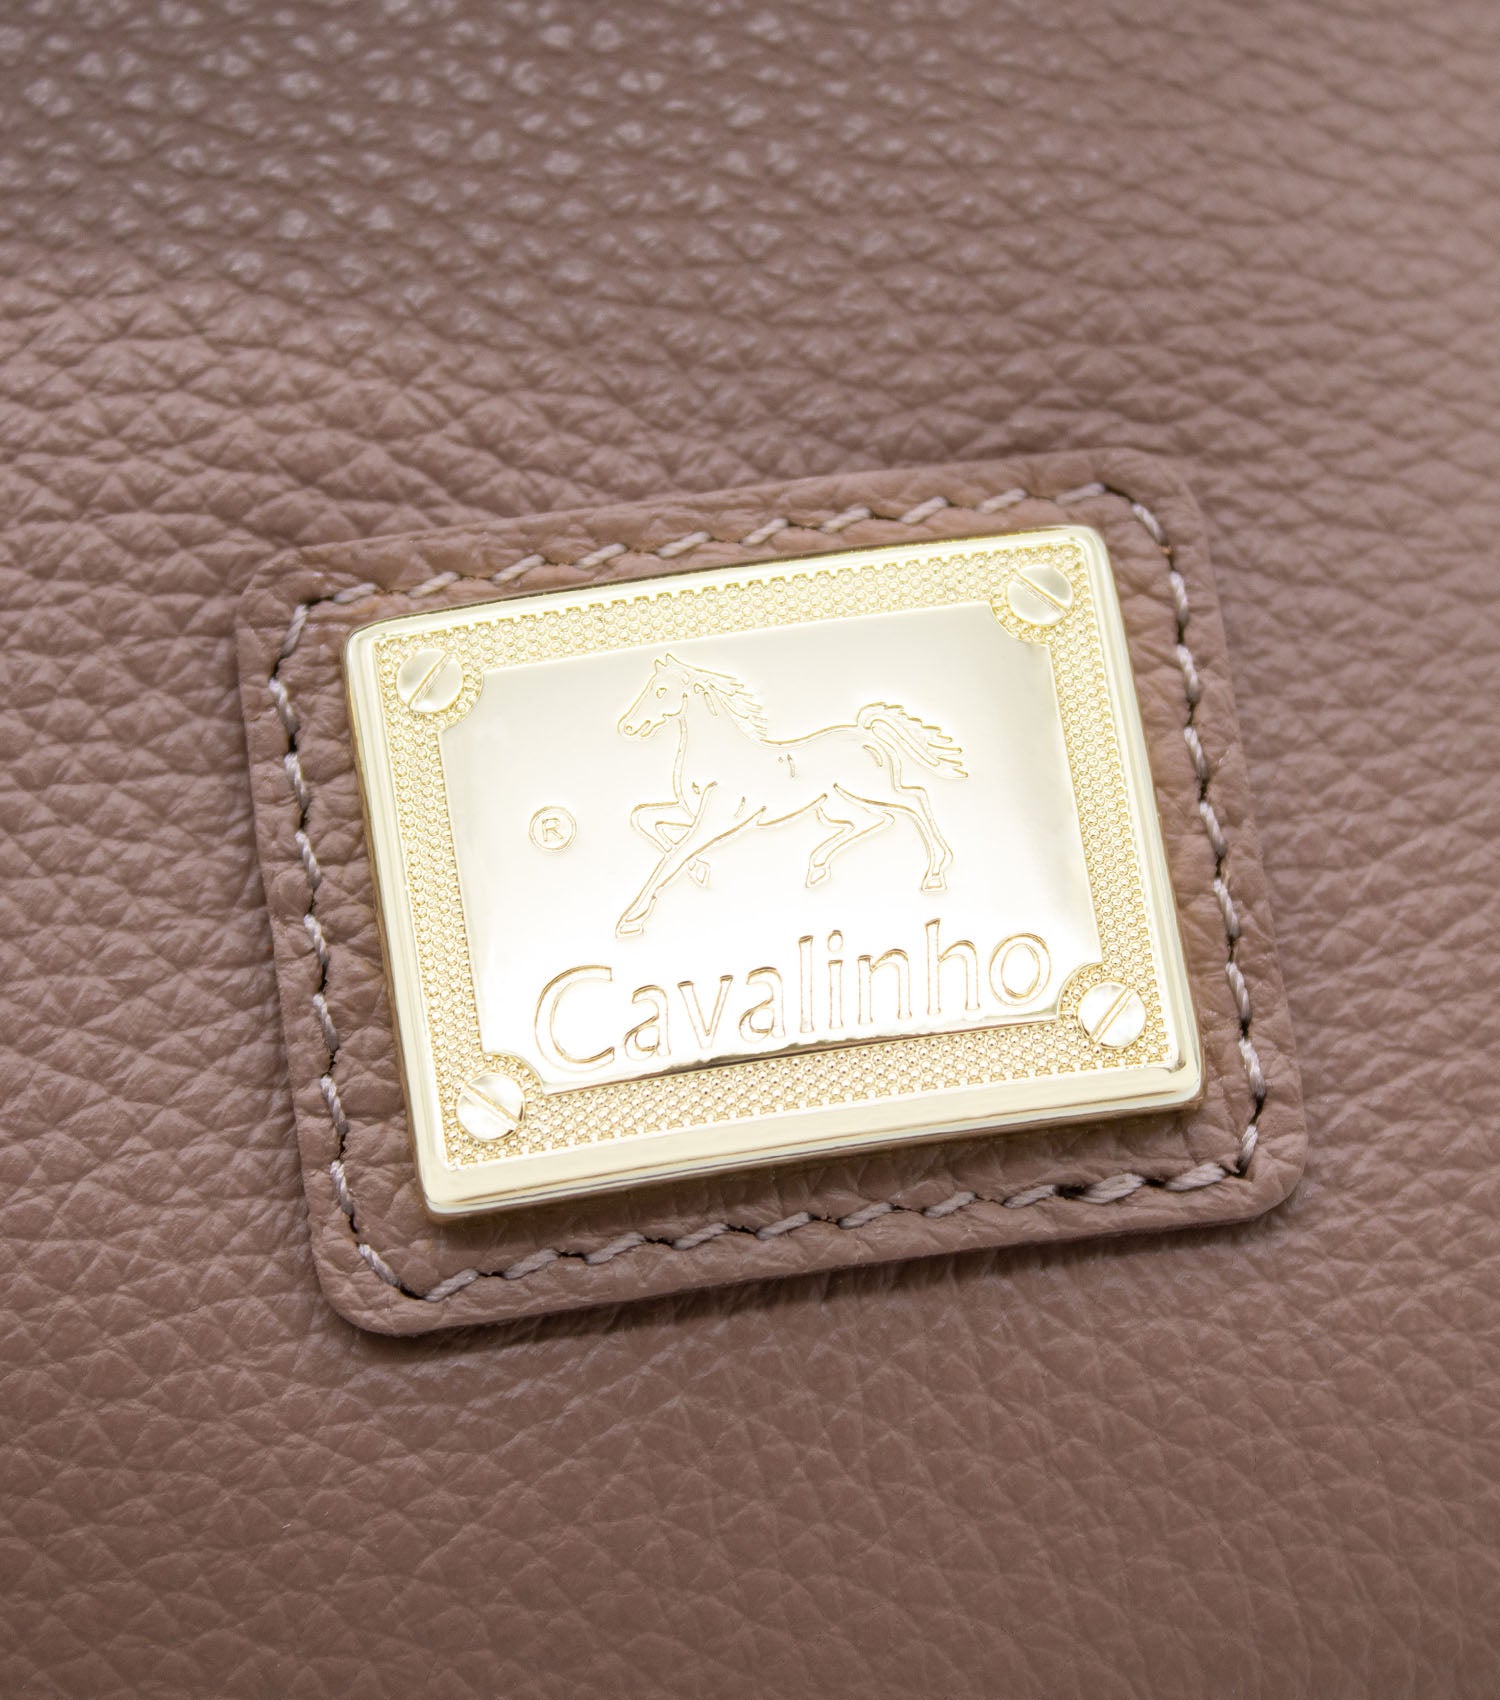 Cavalinho Muse Leather Handbag - SKU 18300515.07.99. | #color_Sand